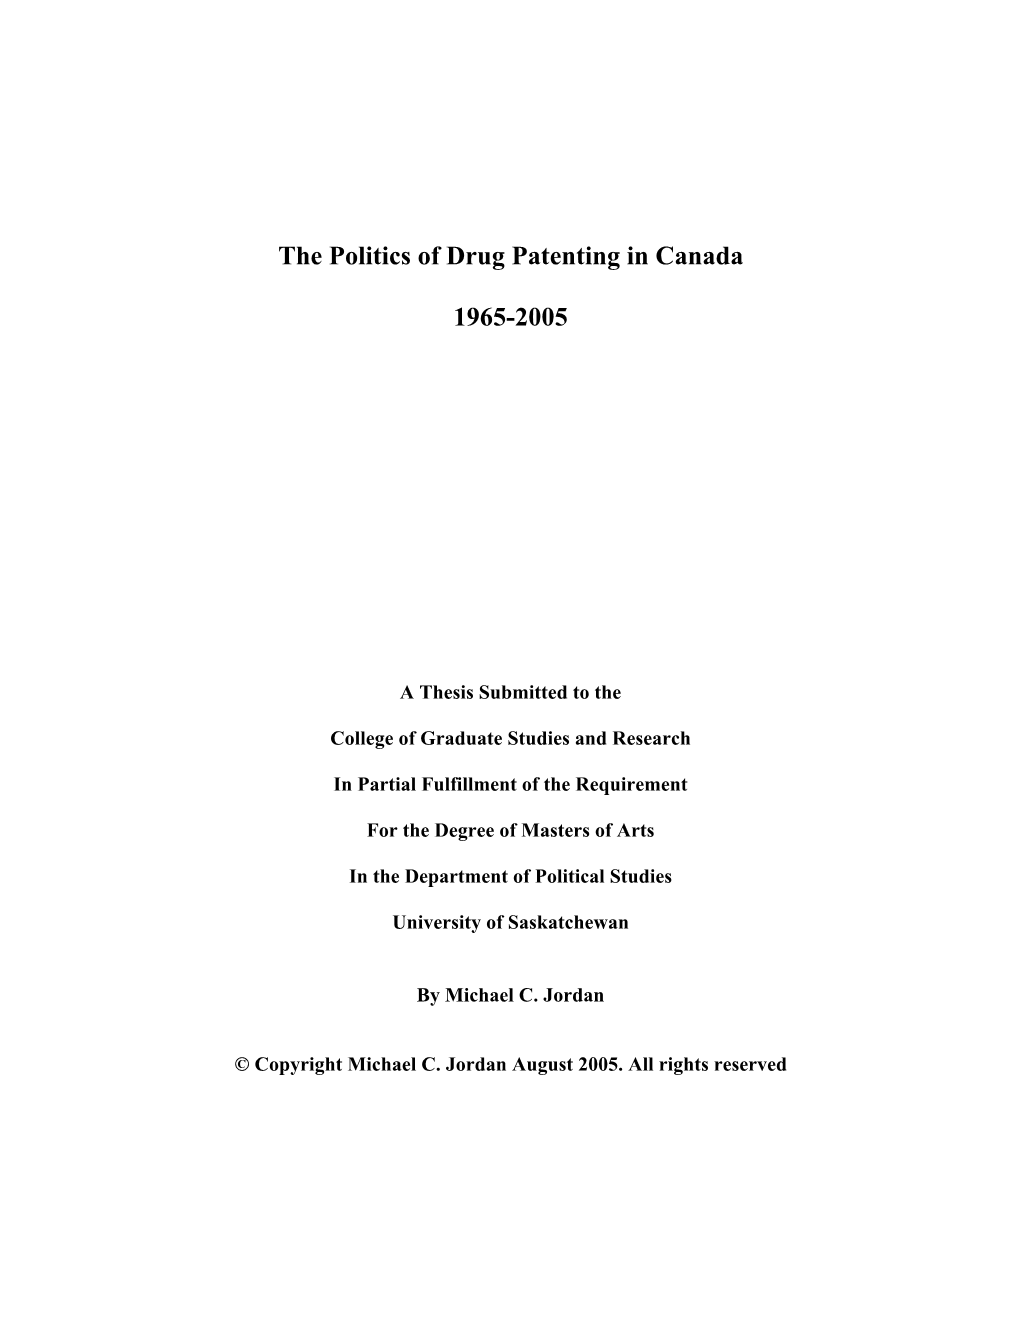 The Politics of Drug Patenting in Canada 1965-2005